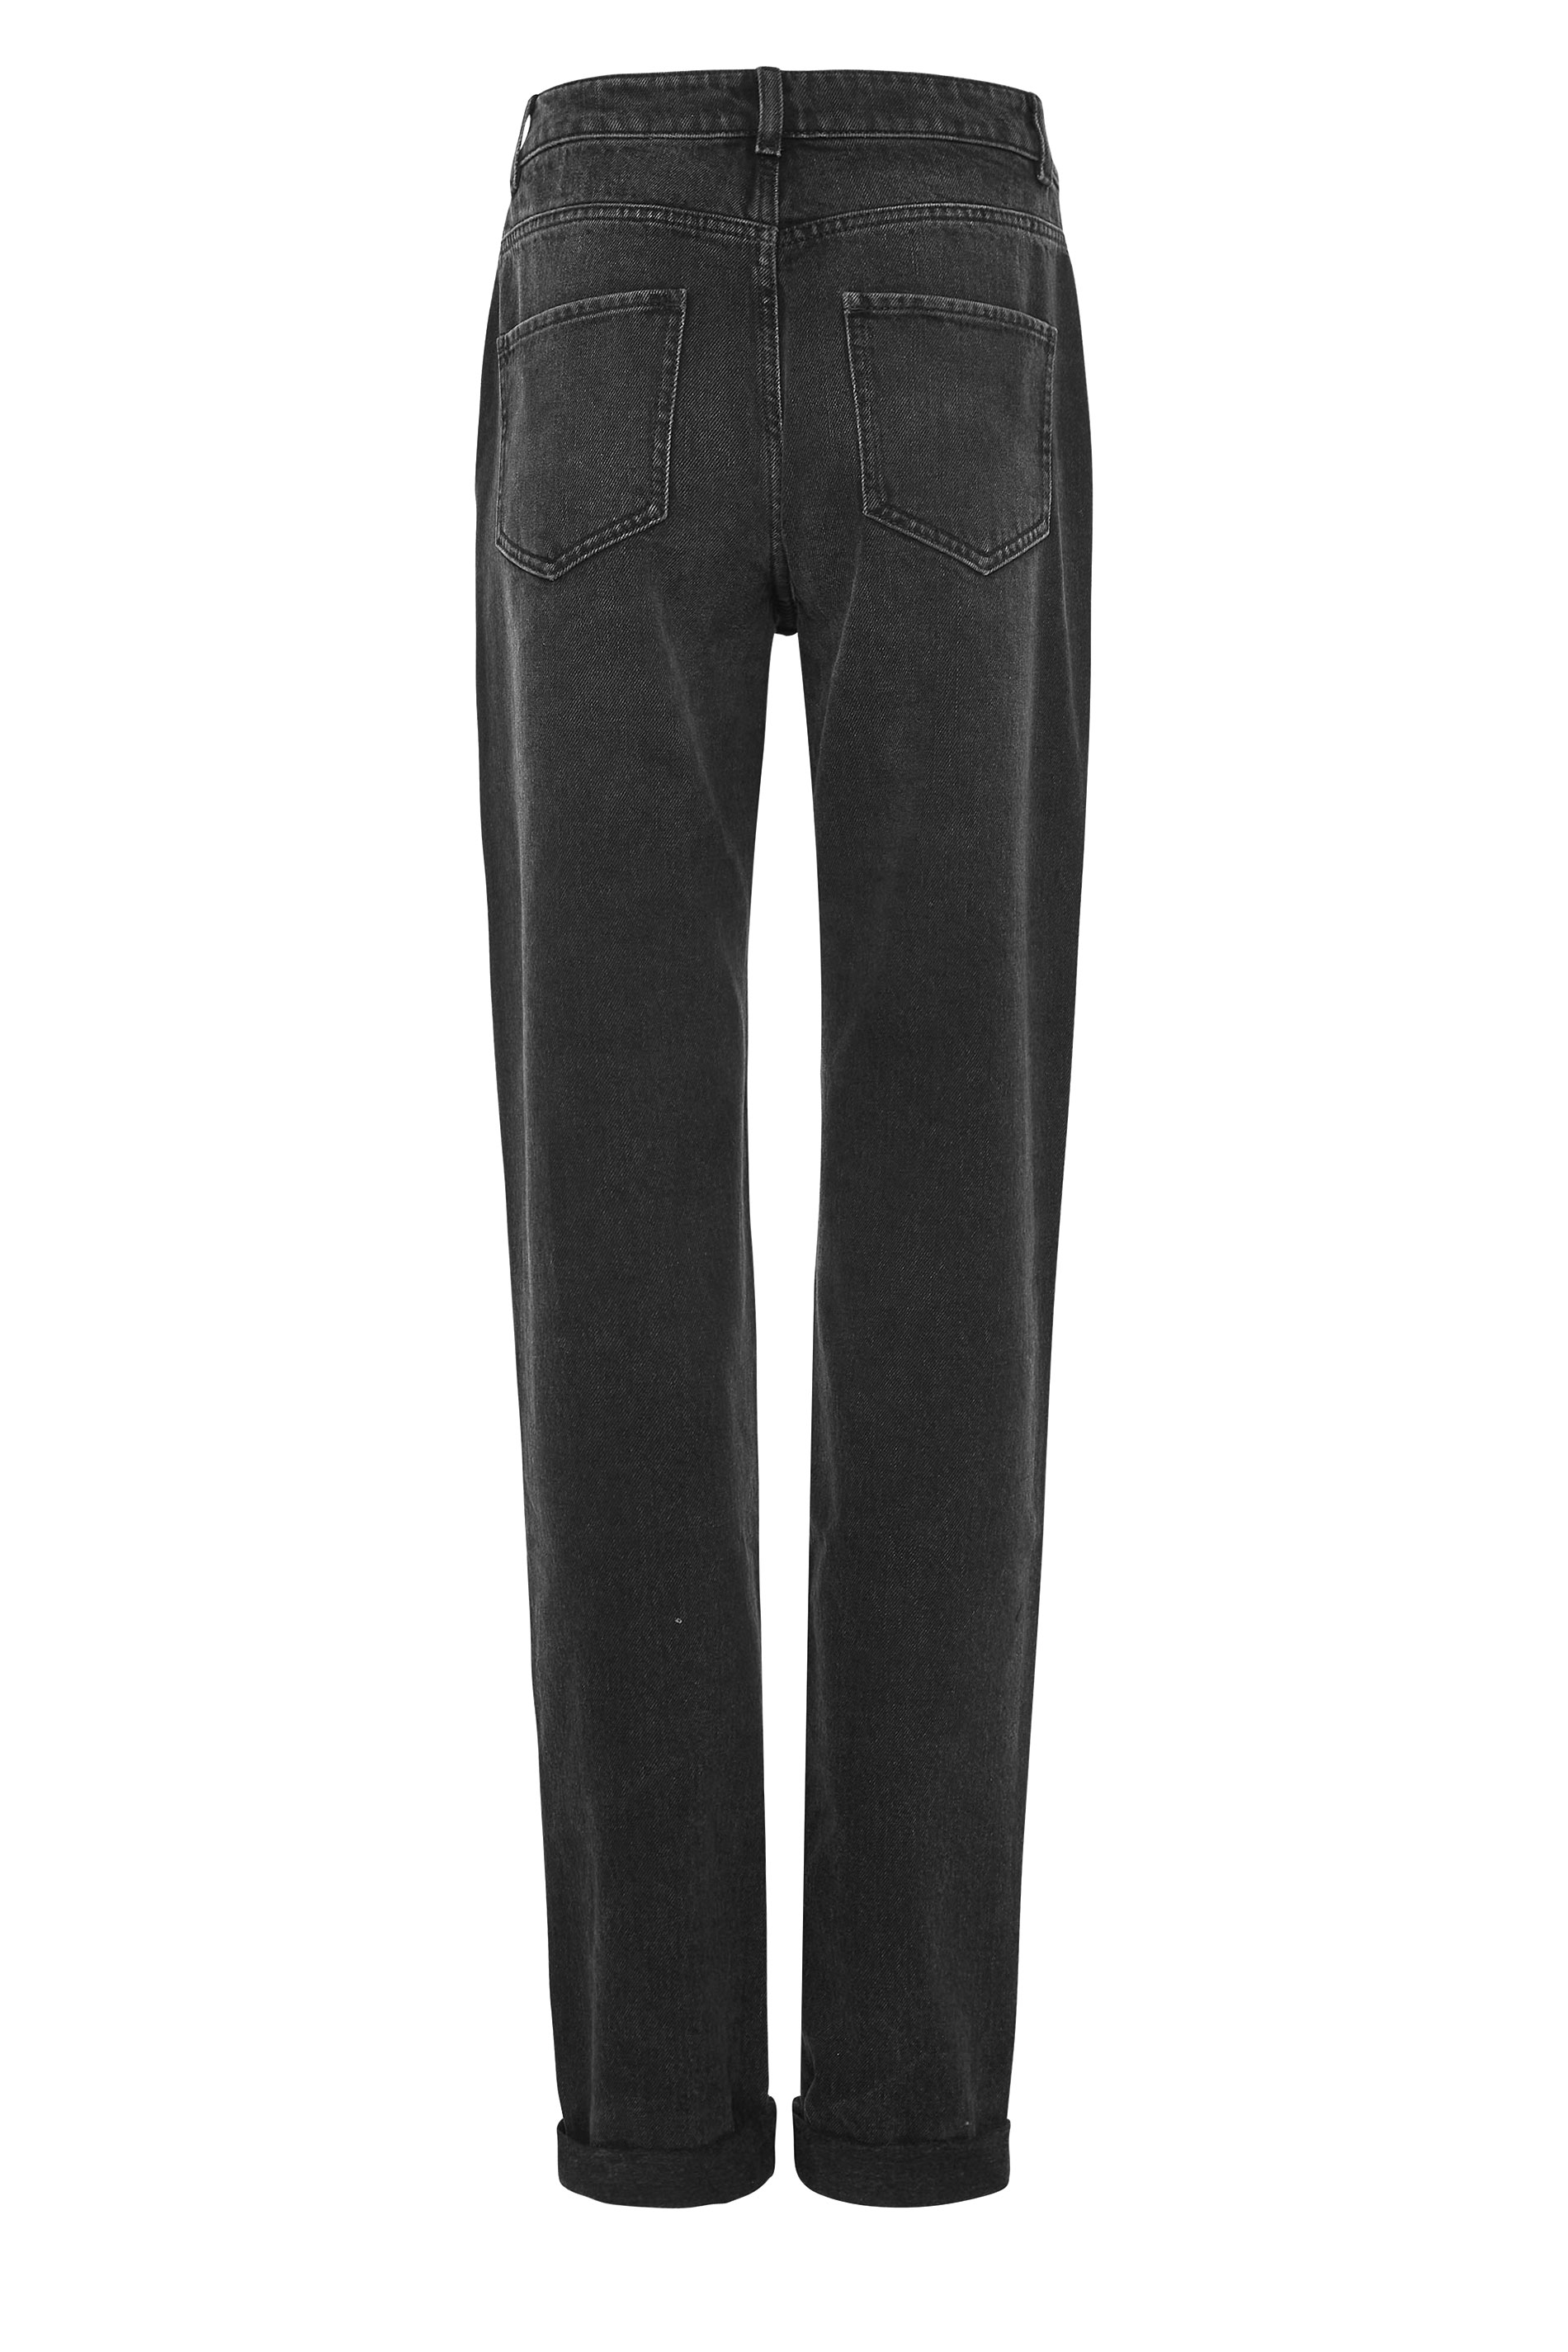 Tall Women's LTS Black Washed Boyfriend Jeans | Long Tall Sally